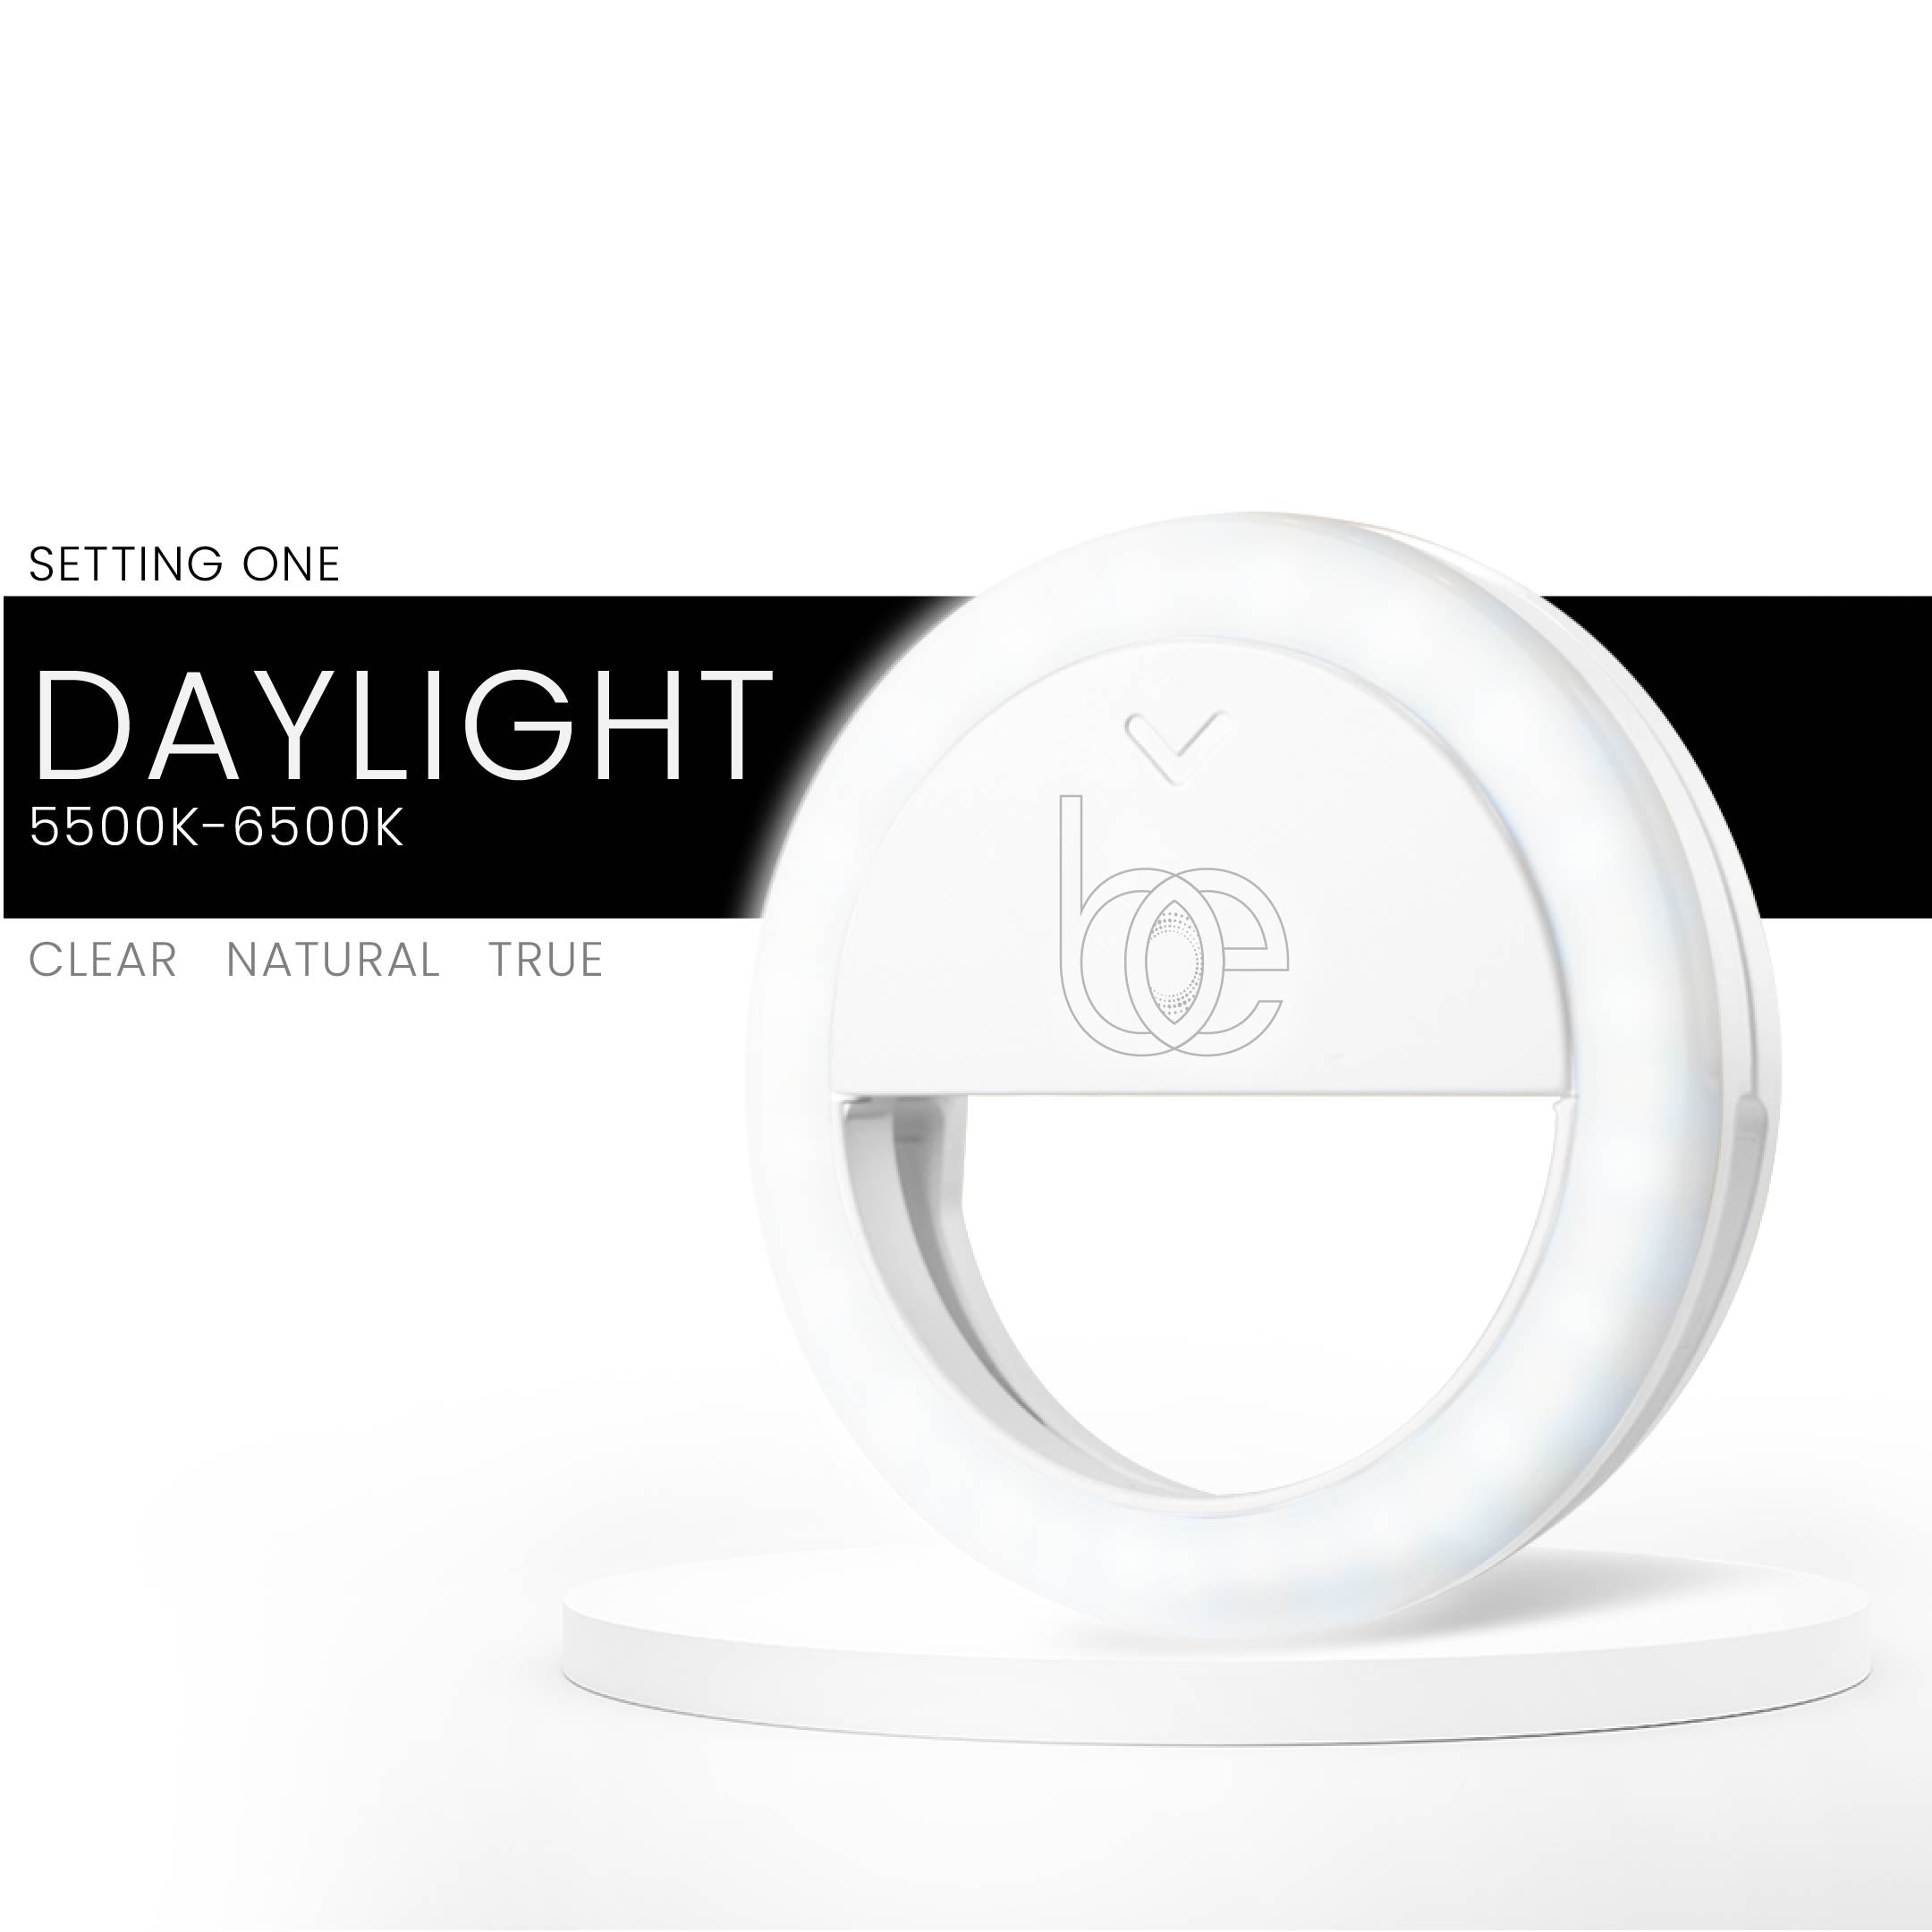 Brighteye™ LED Ring Light